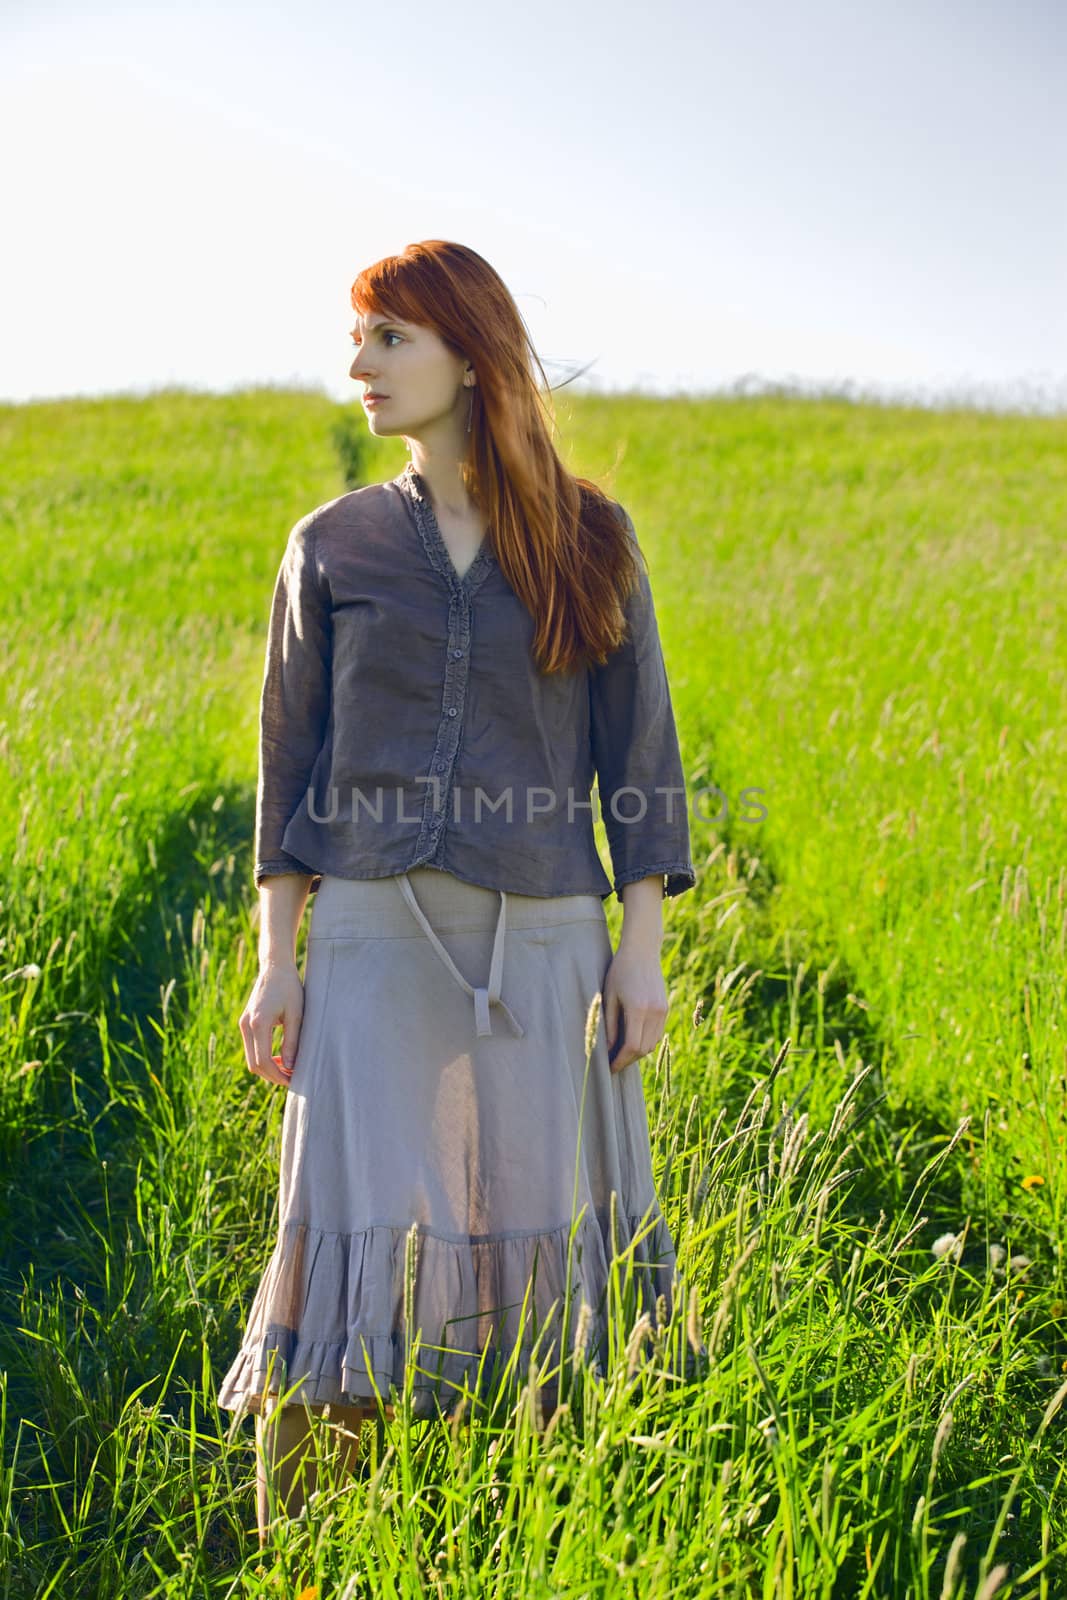 sad redhead woman in grass by petr_malyshev